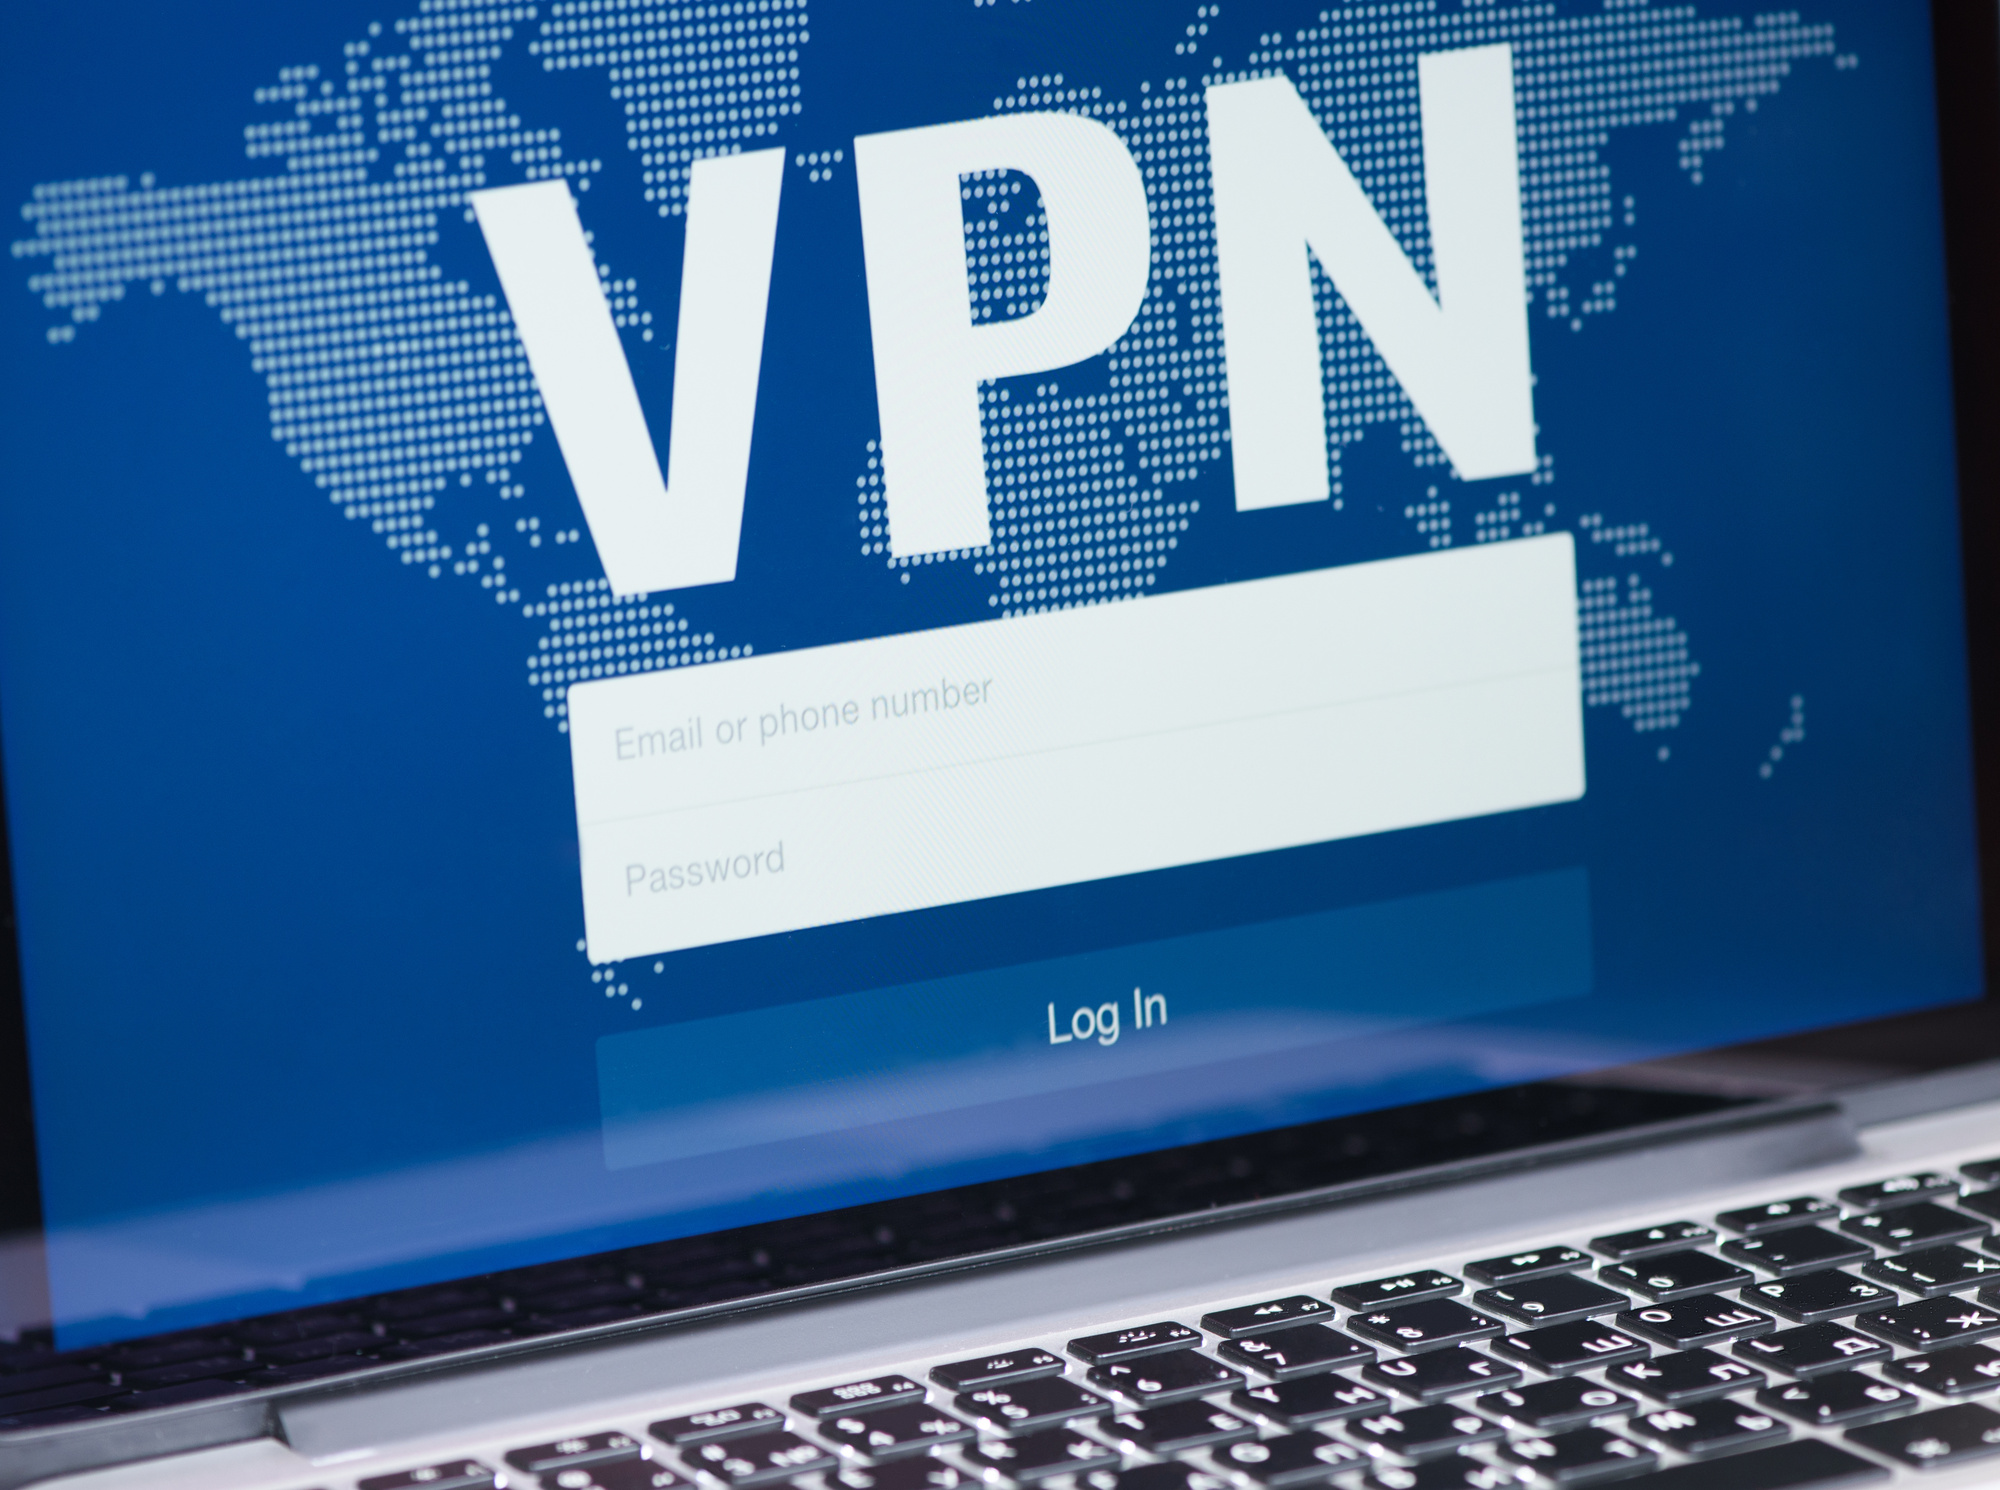 Choosing the Best VPN